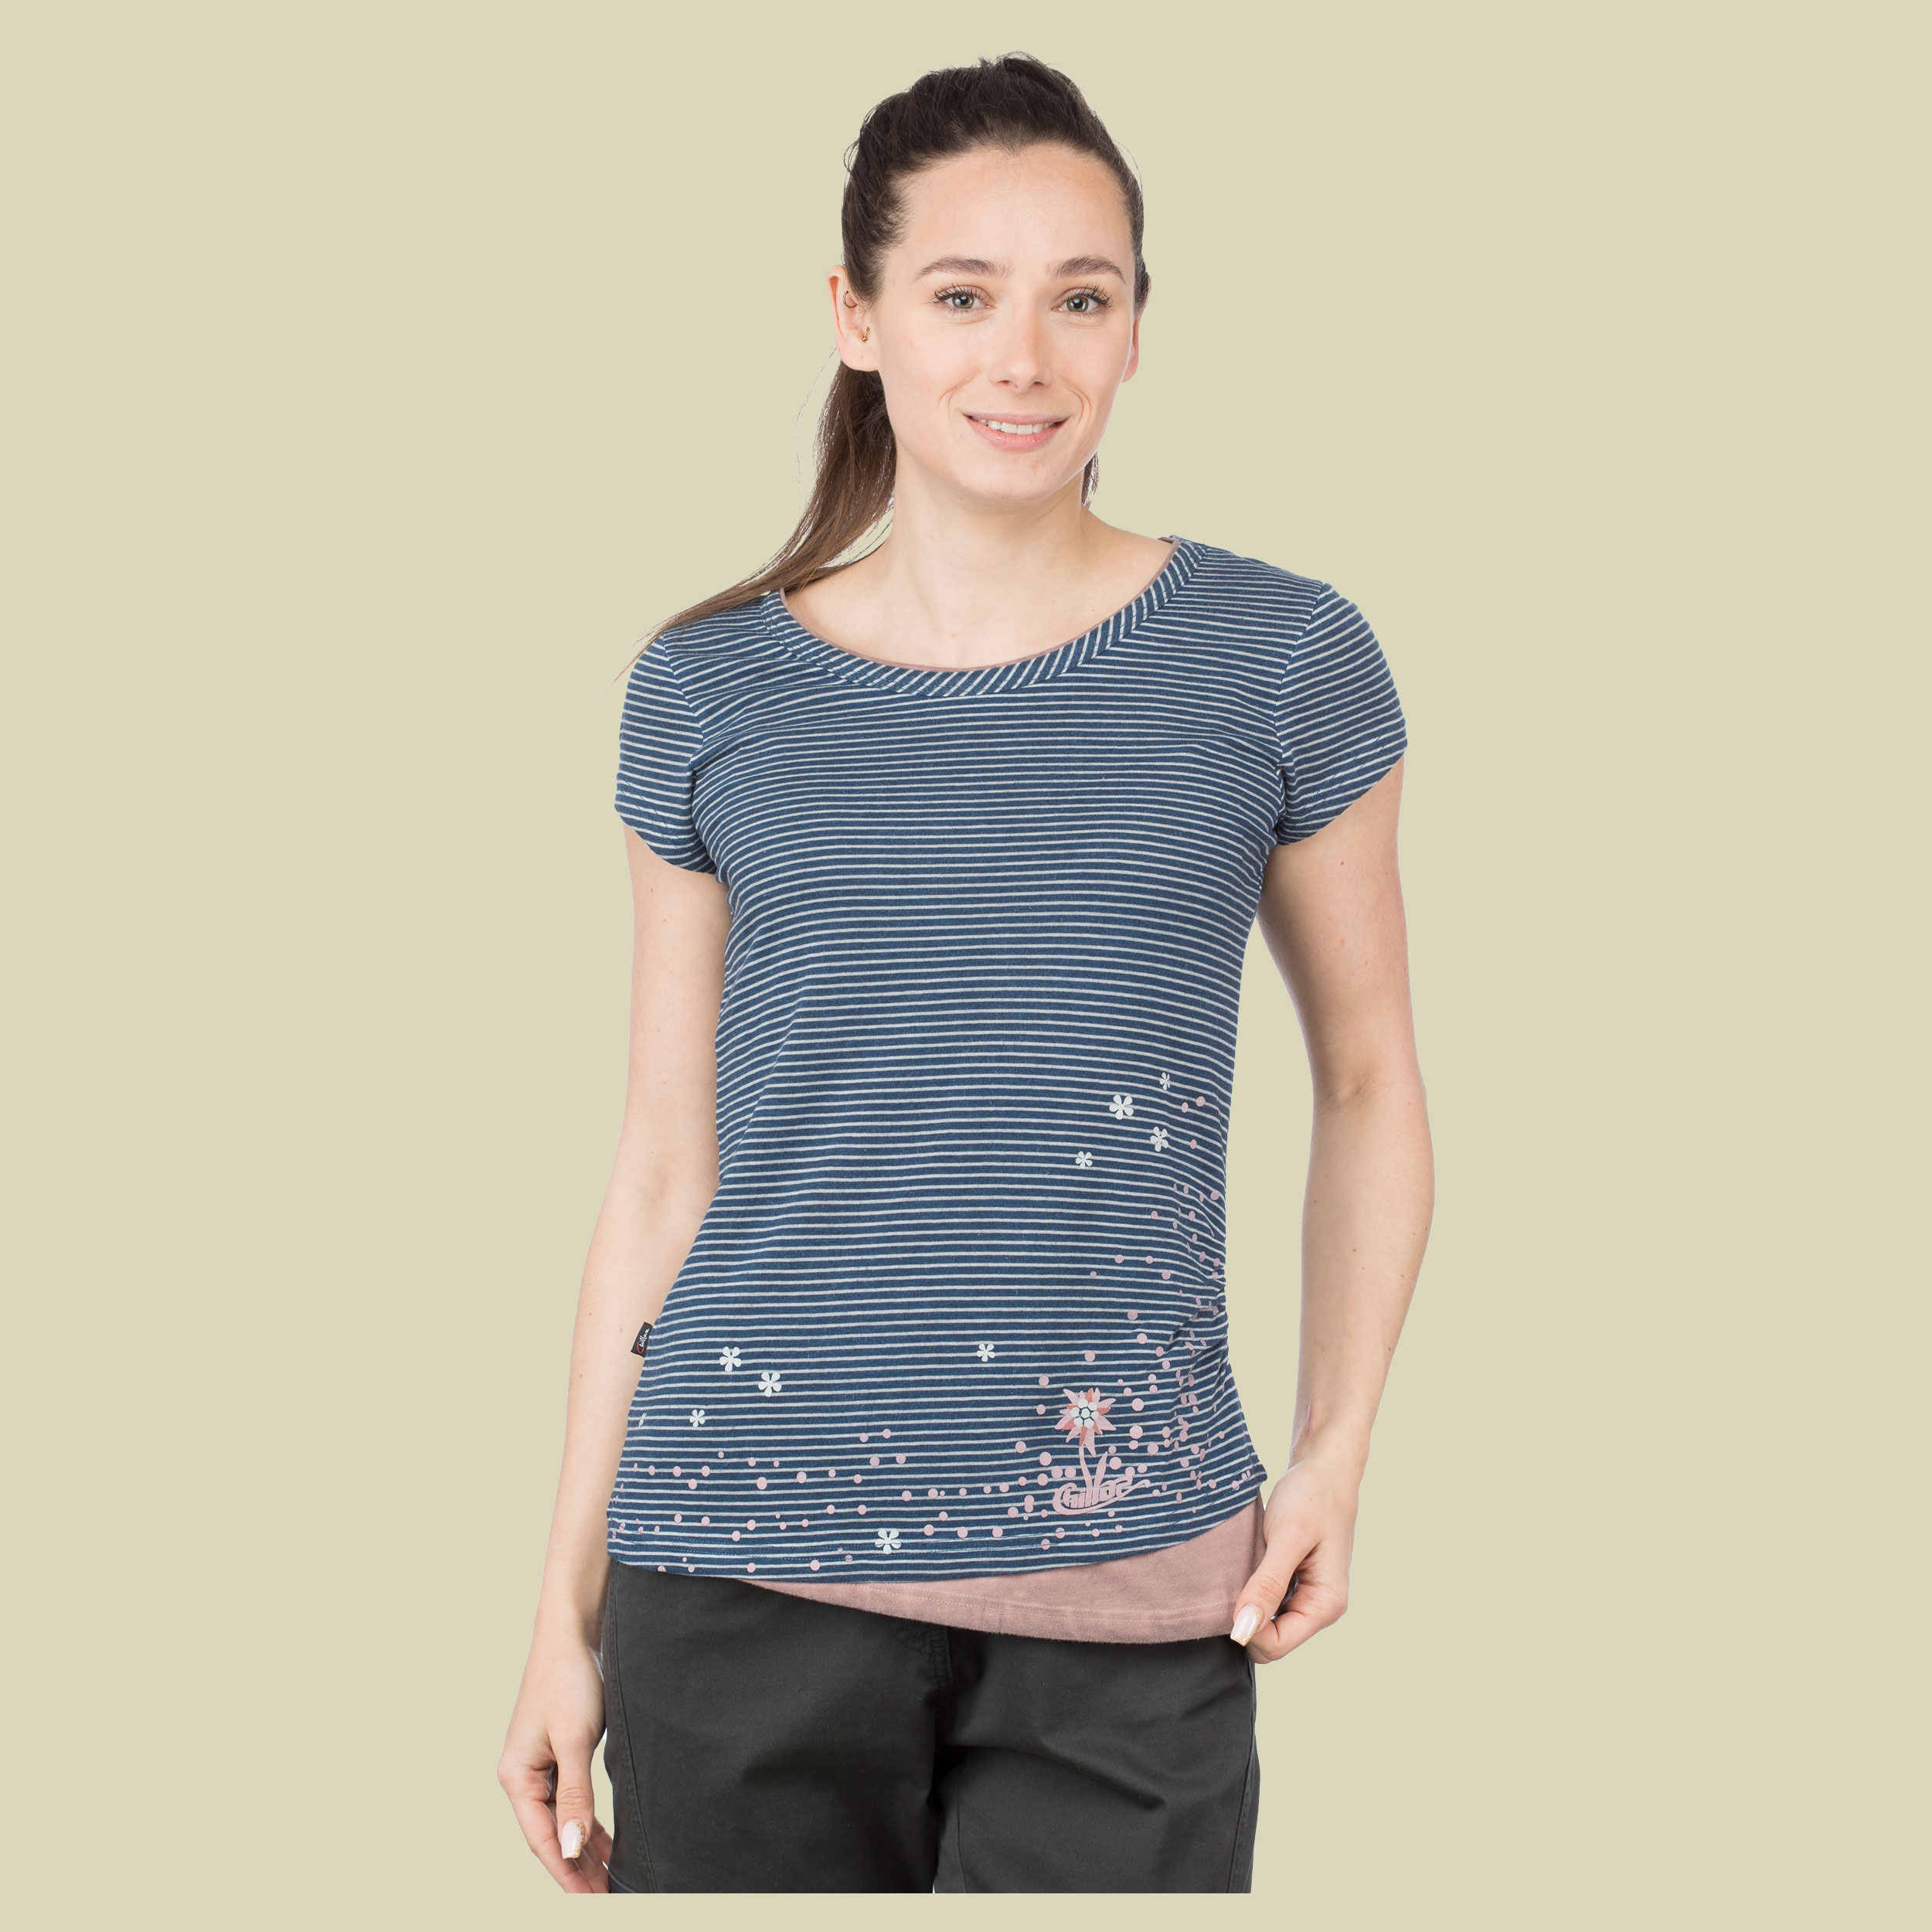 Fancy Little Dot T-Shirt Women Größe 38 Farbe indigo blue stripes washed